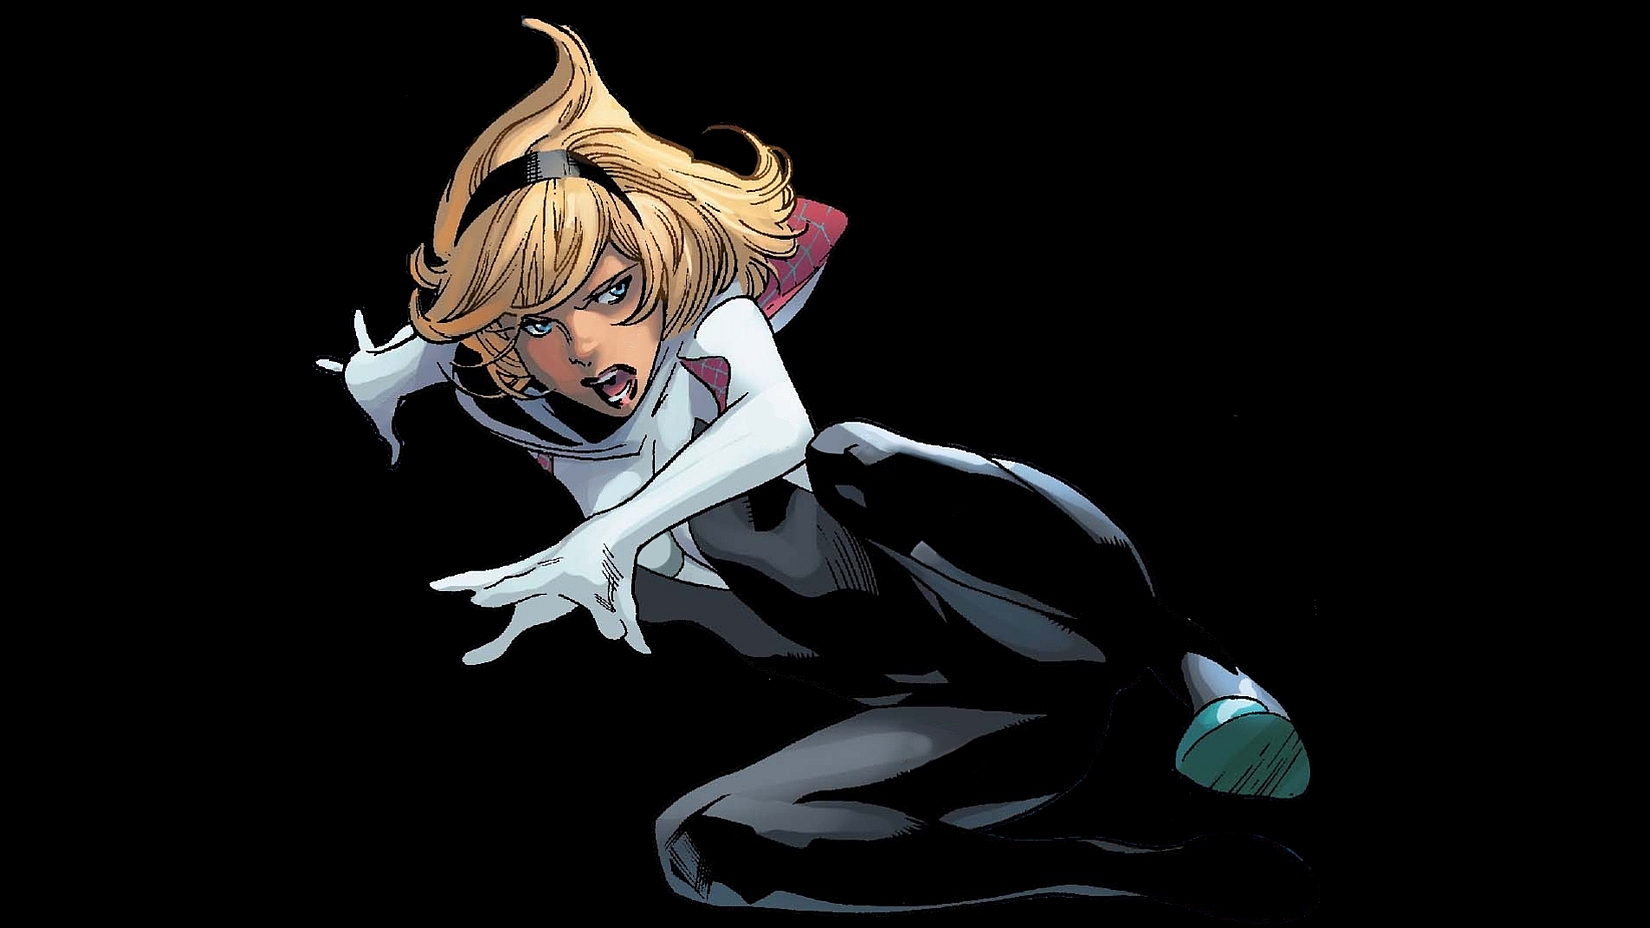 Comics Spider-Gwen HD Wallpaper | Background Image